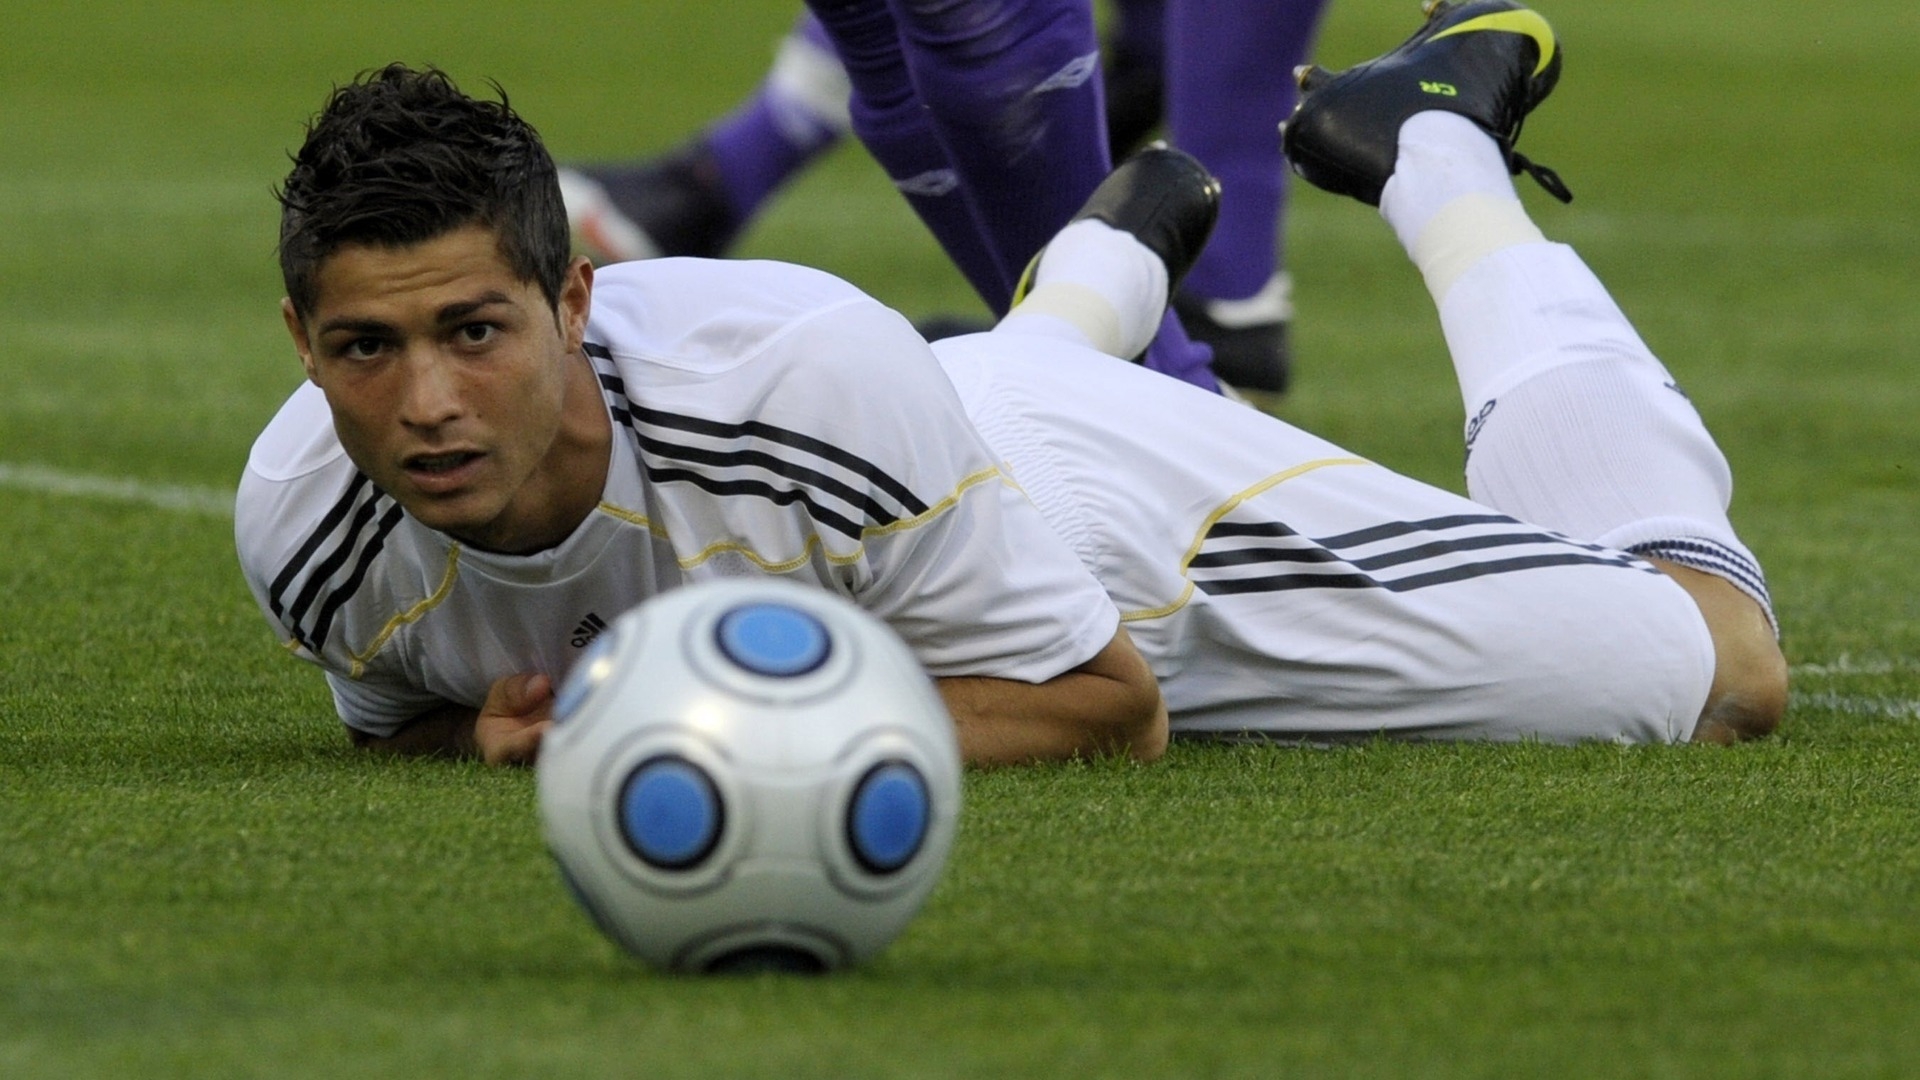 Ronaldo on the football field for 1920 x 1080 HDTV 1080p resolution